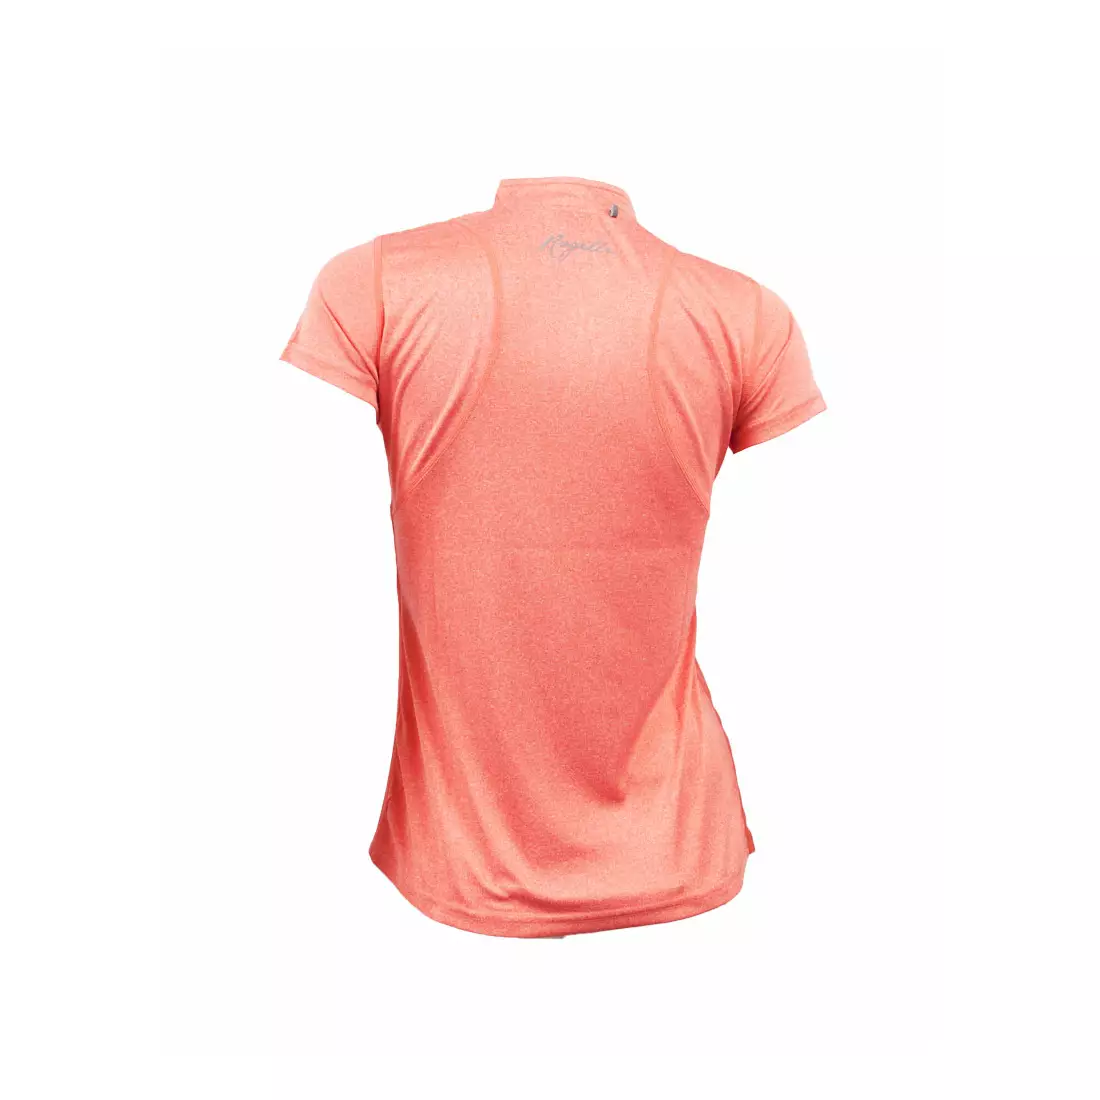 ROGELLI RUN MABYN - Damen-Lauf-T-Shirt, Farbe: Rot meliert